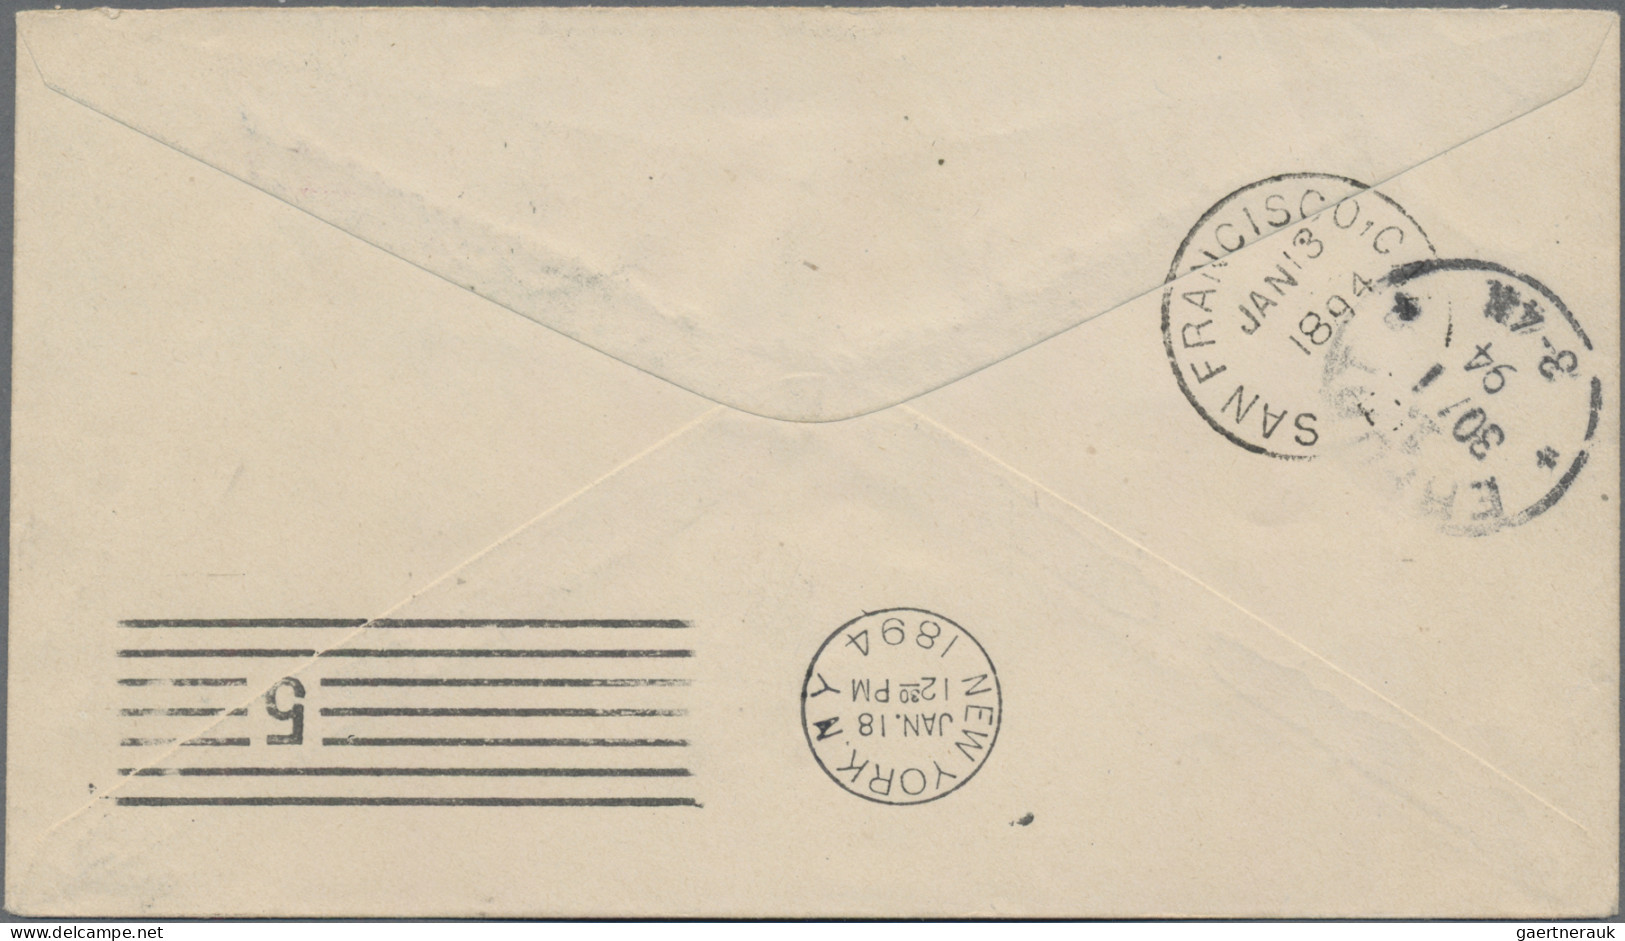 Hawaii - Postal Stationary: 1894m Envelope 5 C., Inside White, Ovpt. "Provisiona - Hawaï